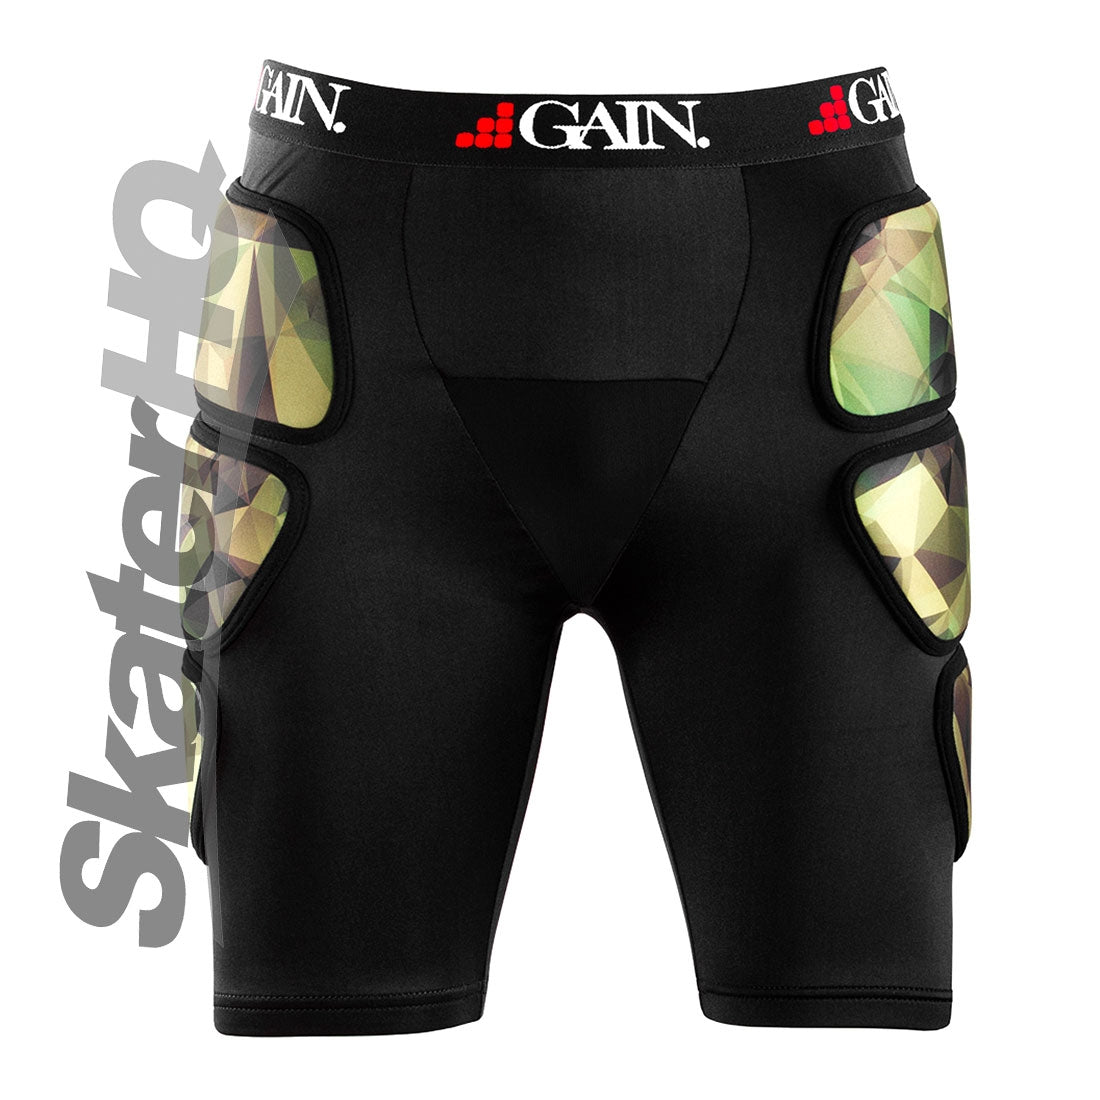 GAIN Sleeper Hip/Bum Pads - Camo - S Protective Gear